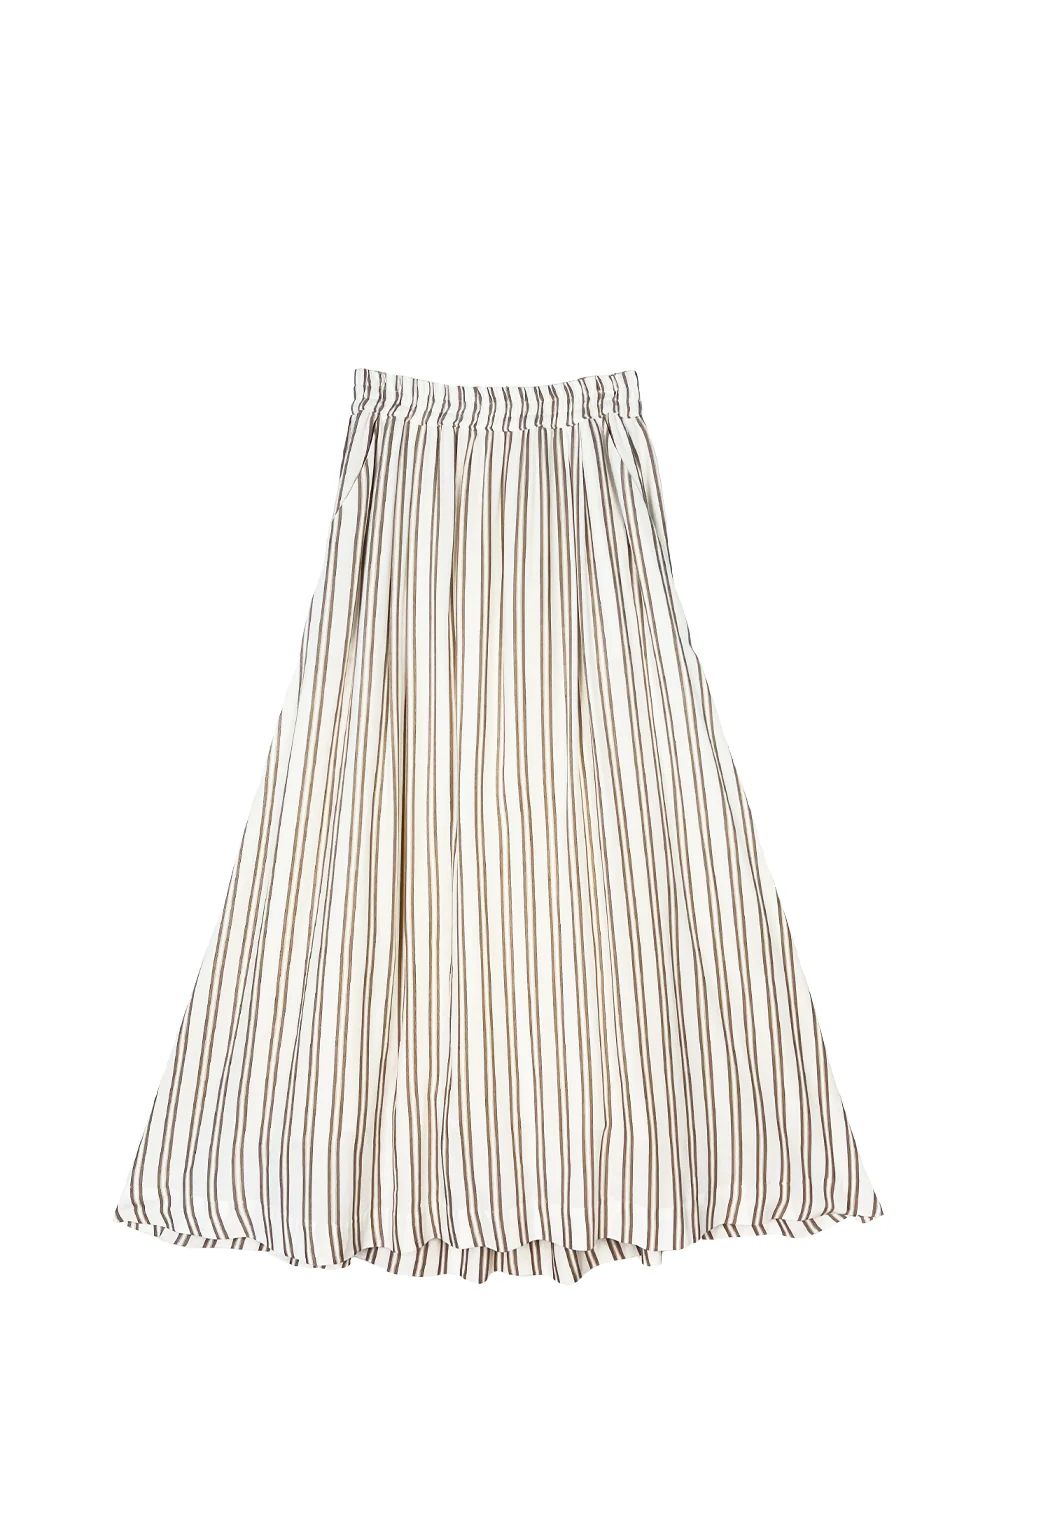 Buru x Jaimie Dewberry Everyday Maxi Skirt - Taupe Stripe | Shop BURU